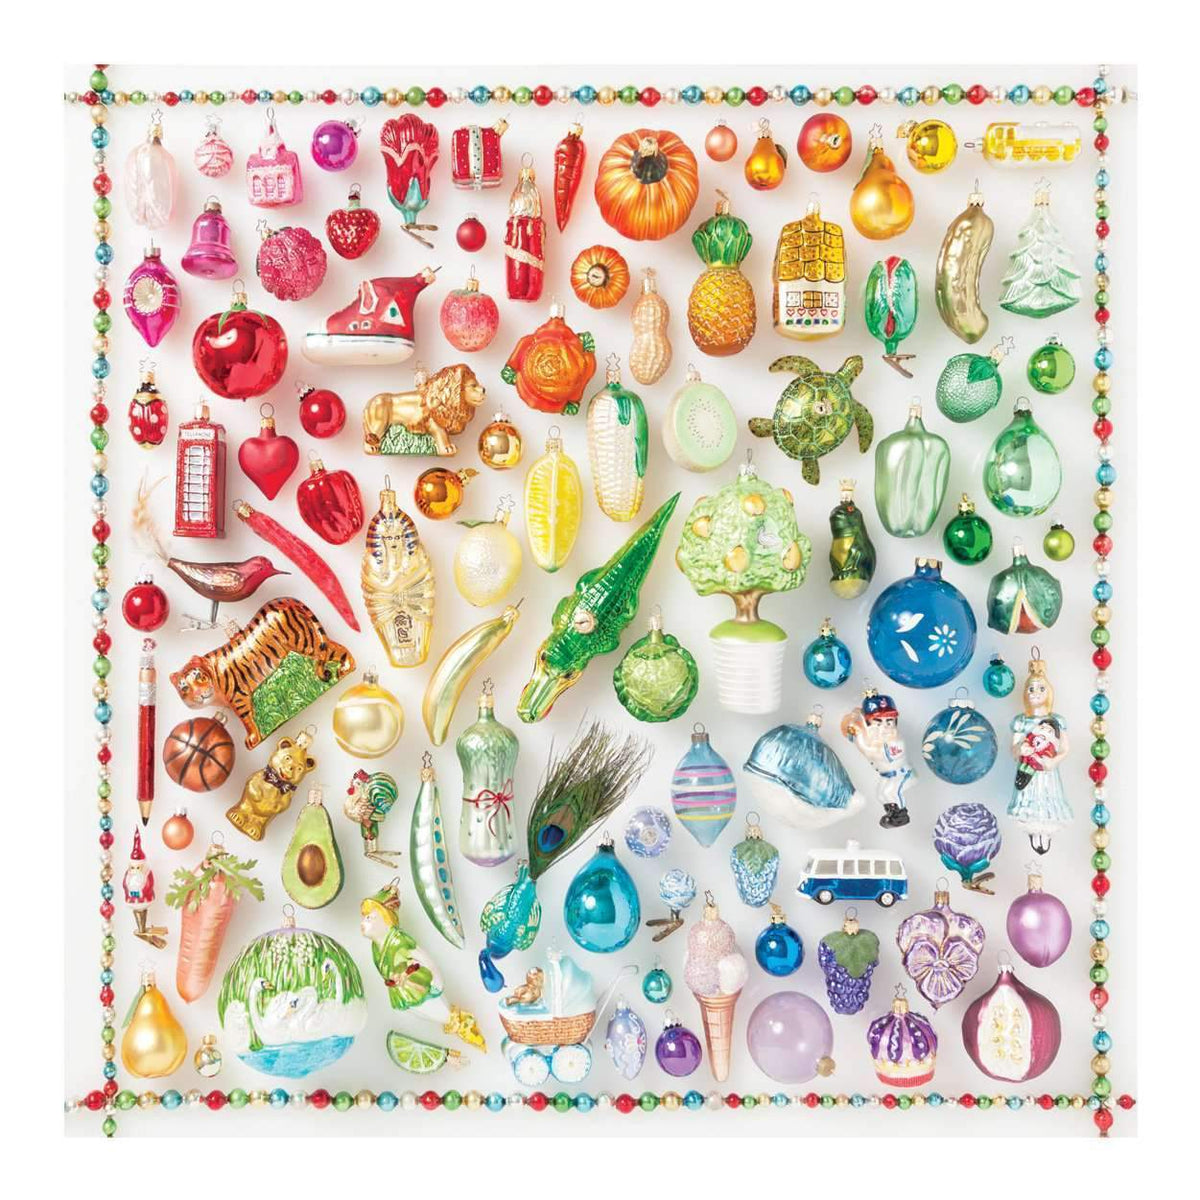 Rainbow Ornaments - 500pc Puzzle Cover